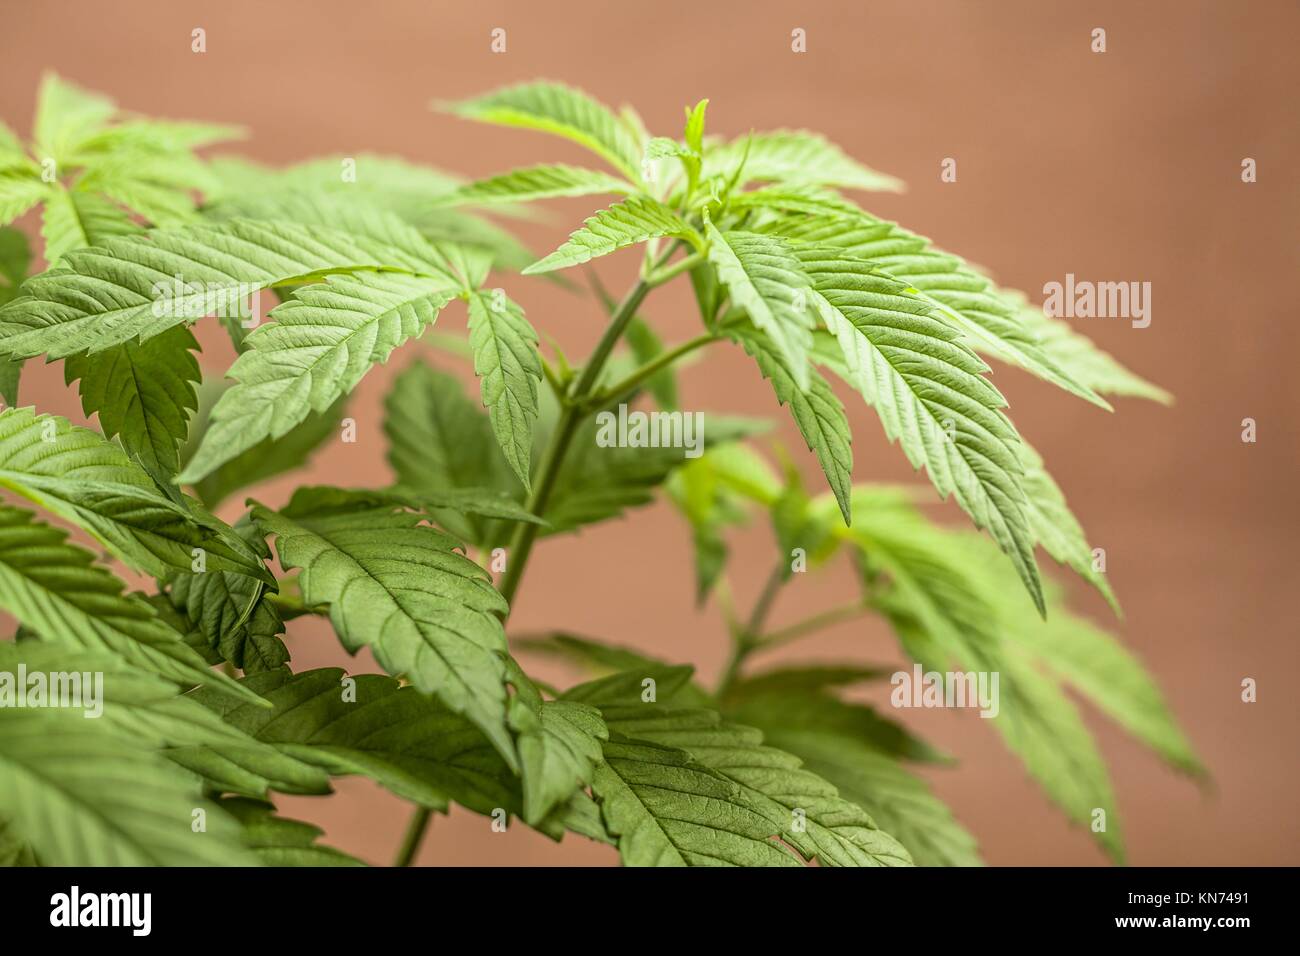 Female Marijuana Plant High Resolution Stock Photography and Images - Alamy